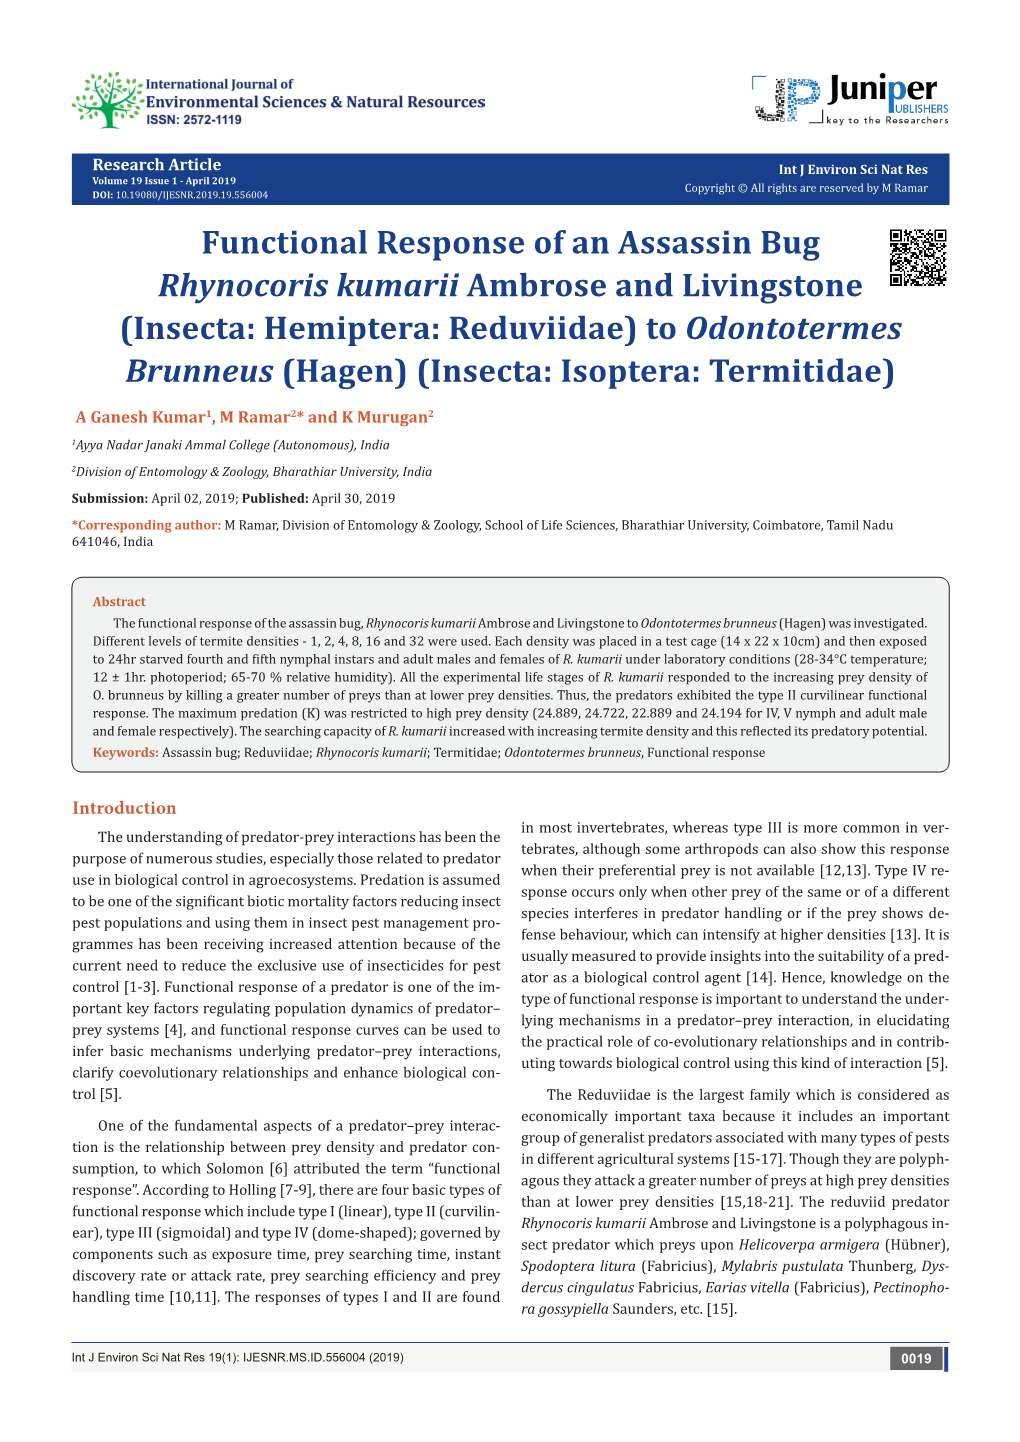 Functional Response of an Assassin Bug Rhynocoris Kumarii Ambrose